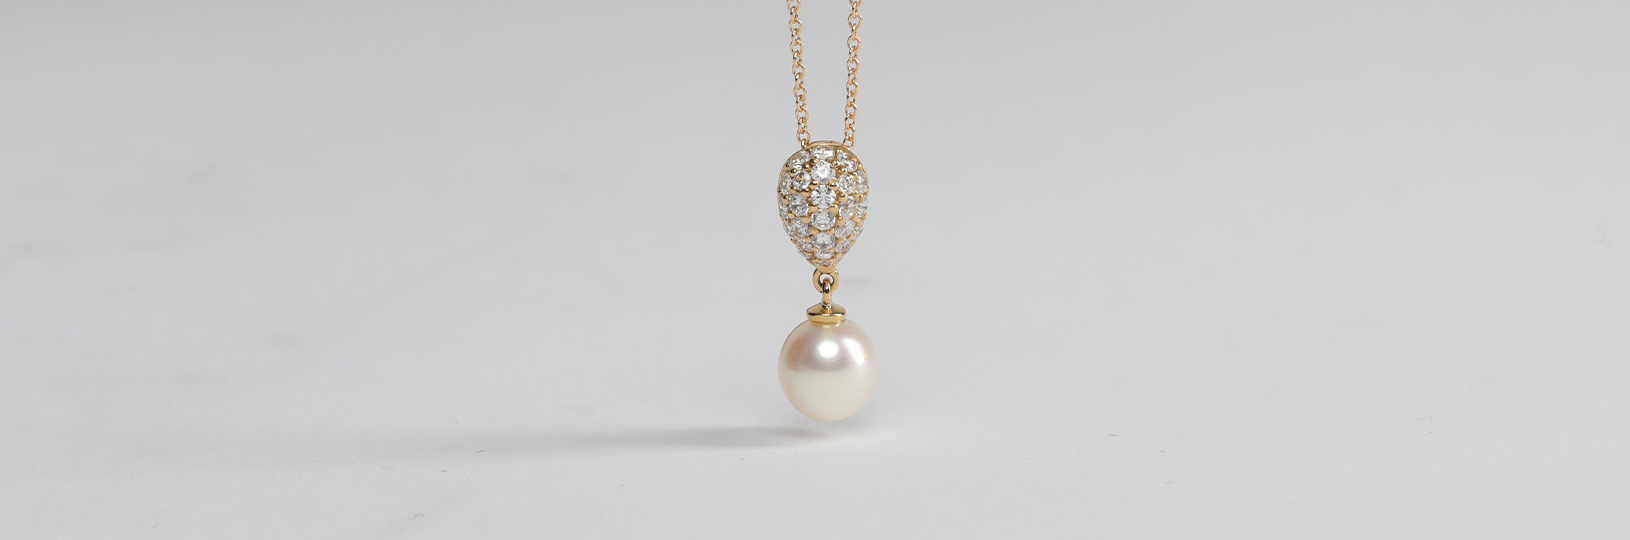 Cultured pearl pendant